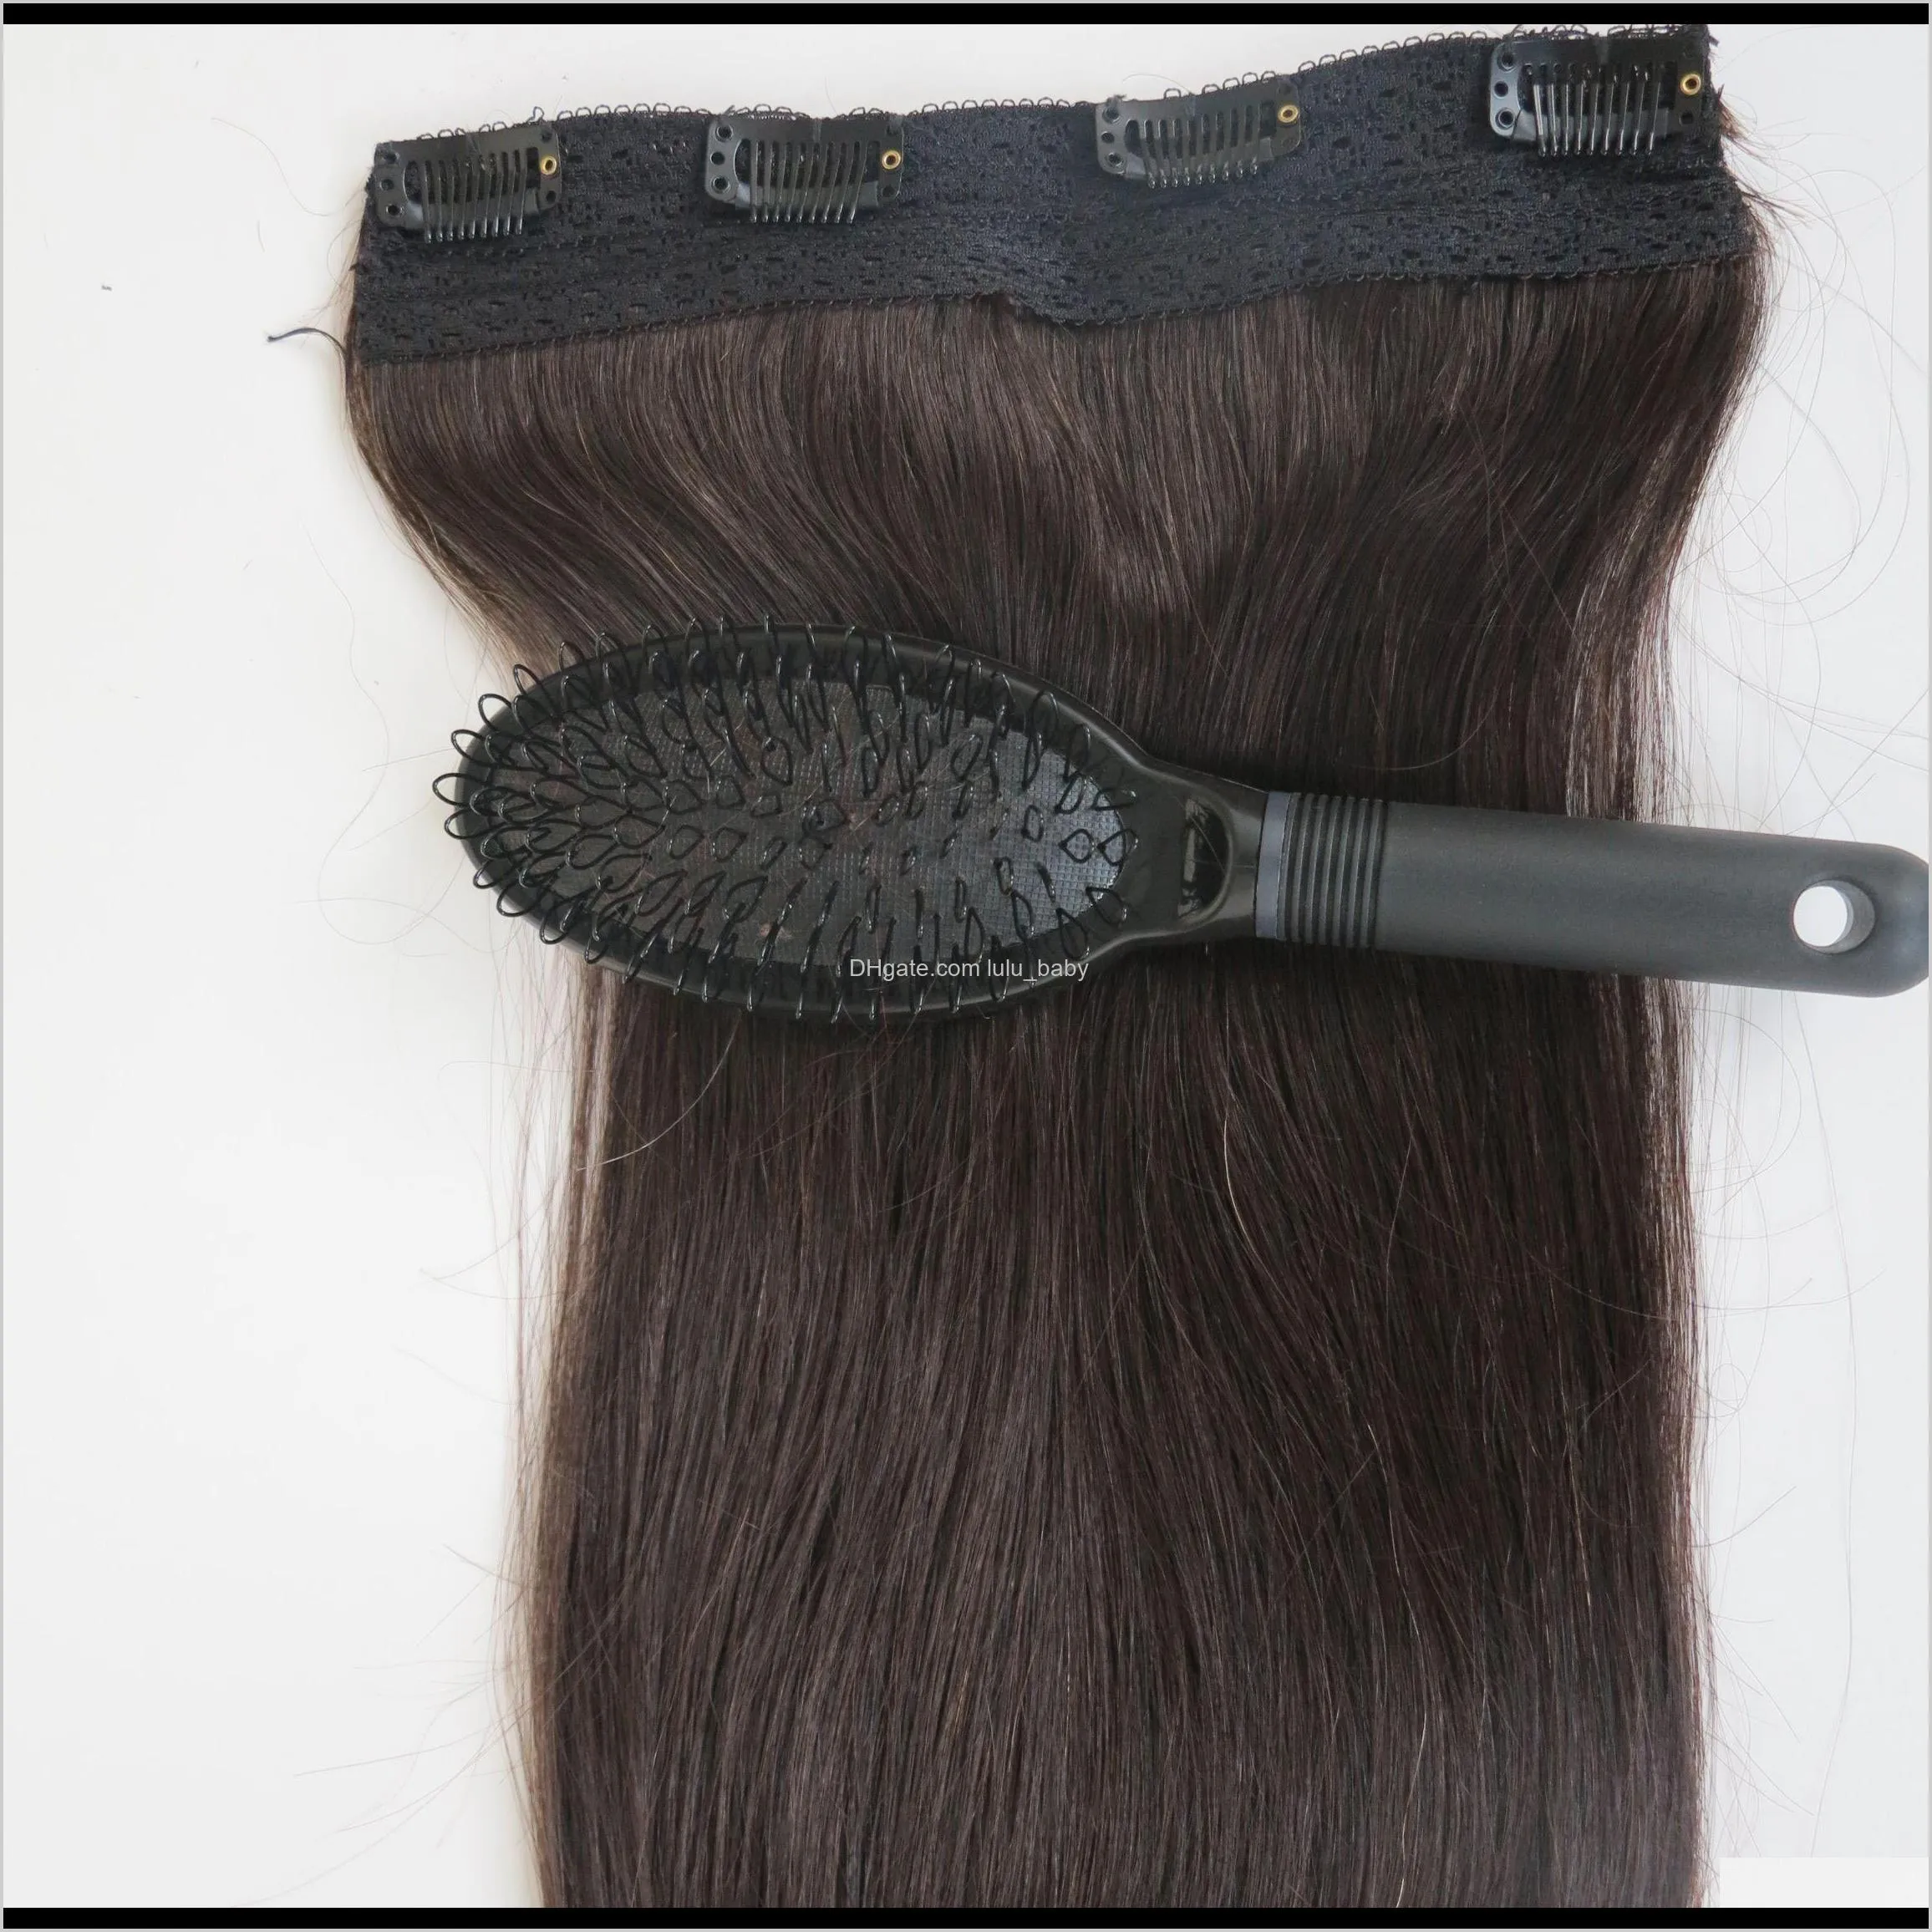 80g 20 22inch brazilian clip in hair extension 100% humann hair #1b/off black remy straight hair weaves 1pcs/set comb